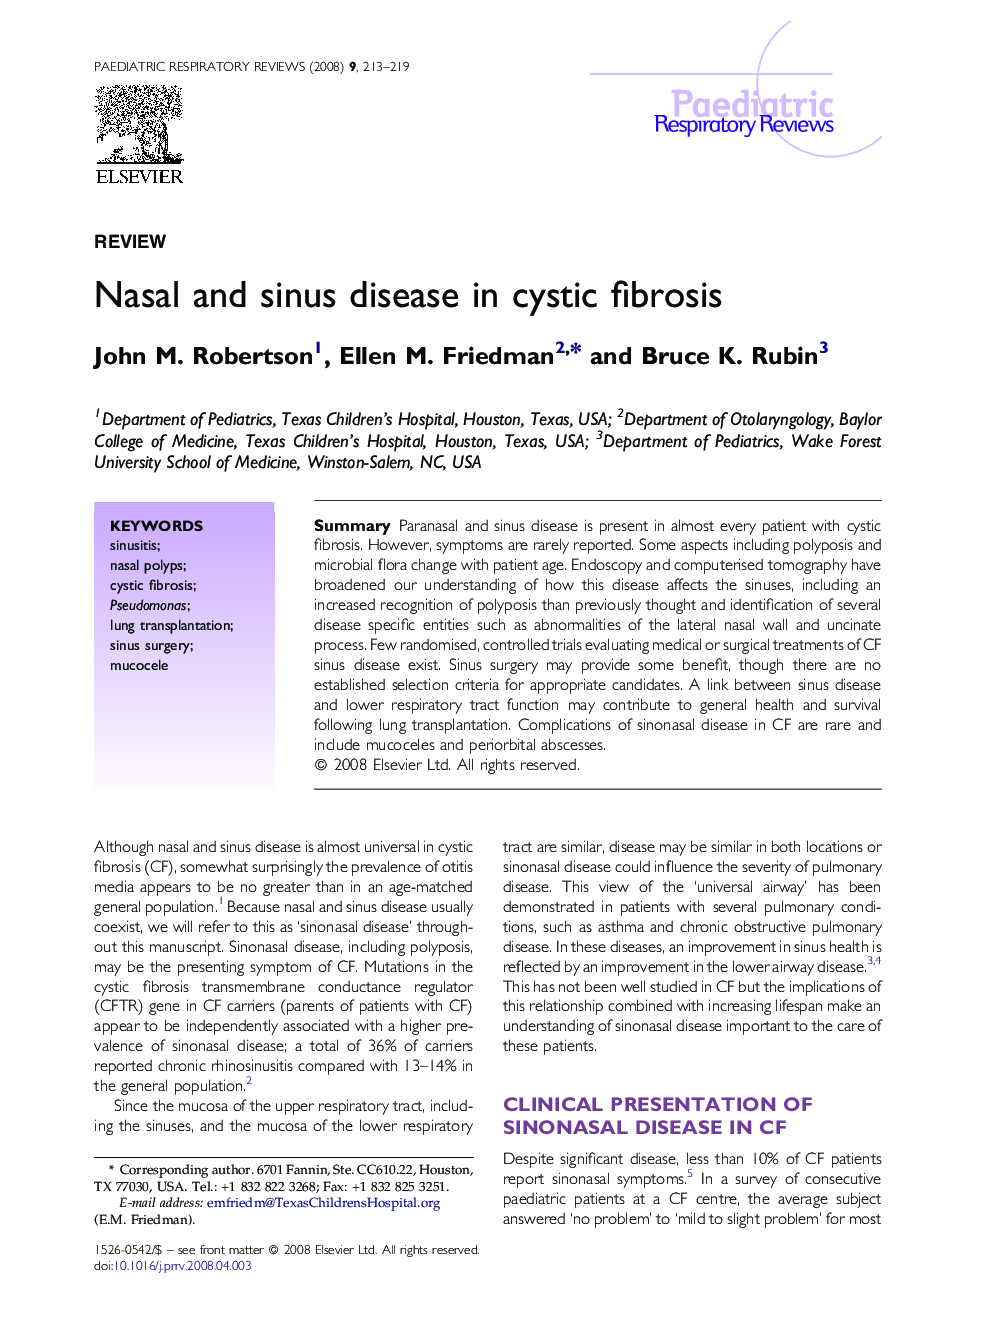 Nasal and sinus disease in cystic fibrosis